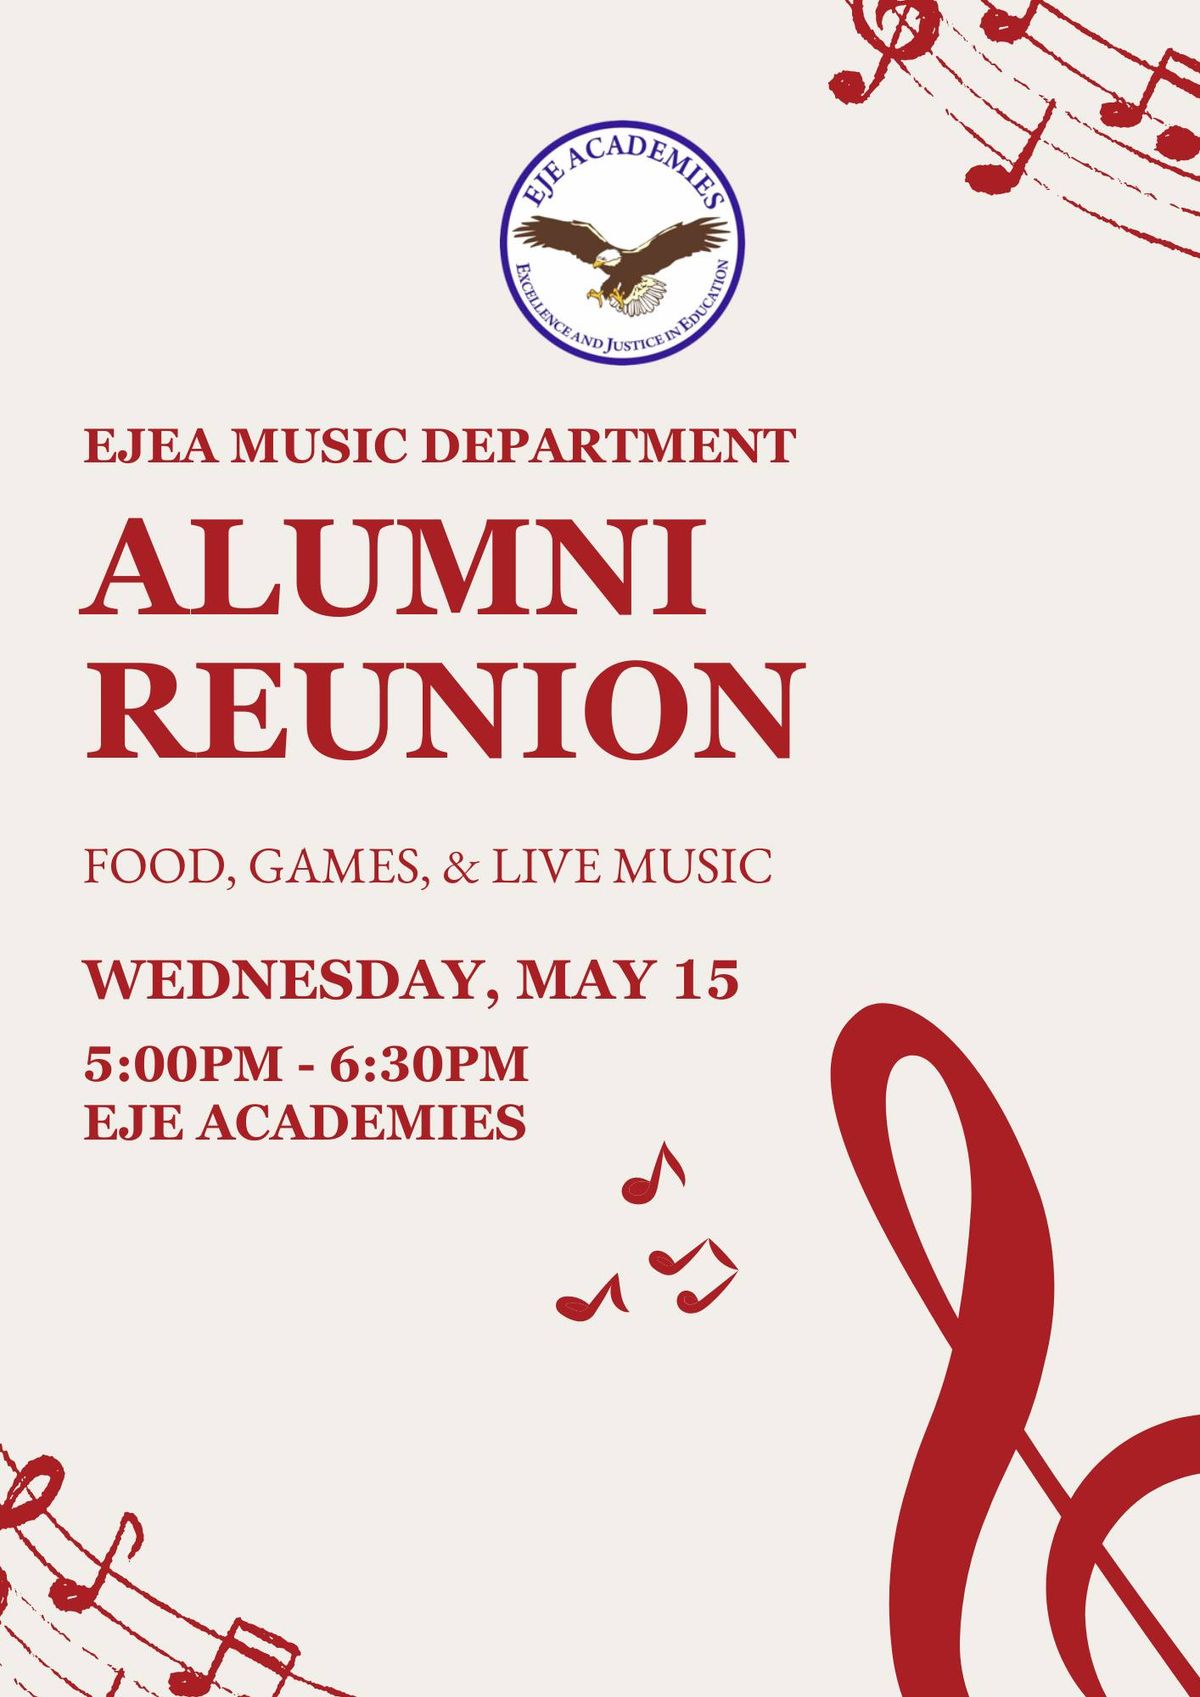 EJEA Music Department Alumni Reunion